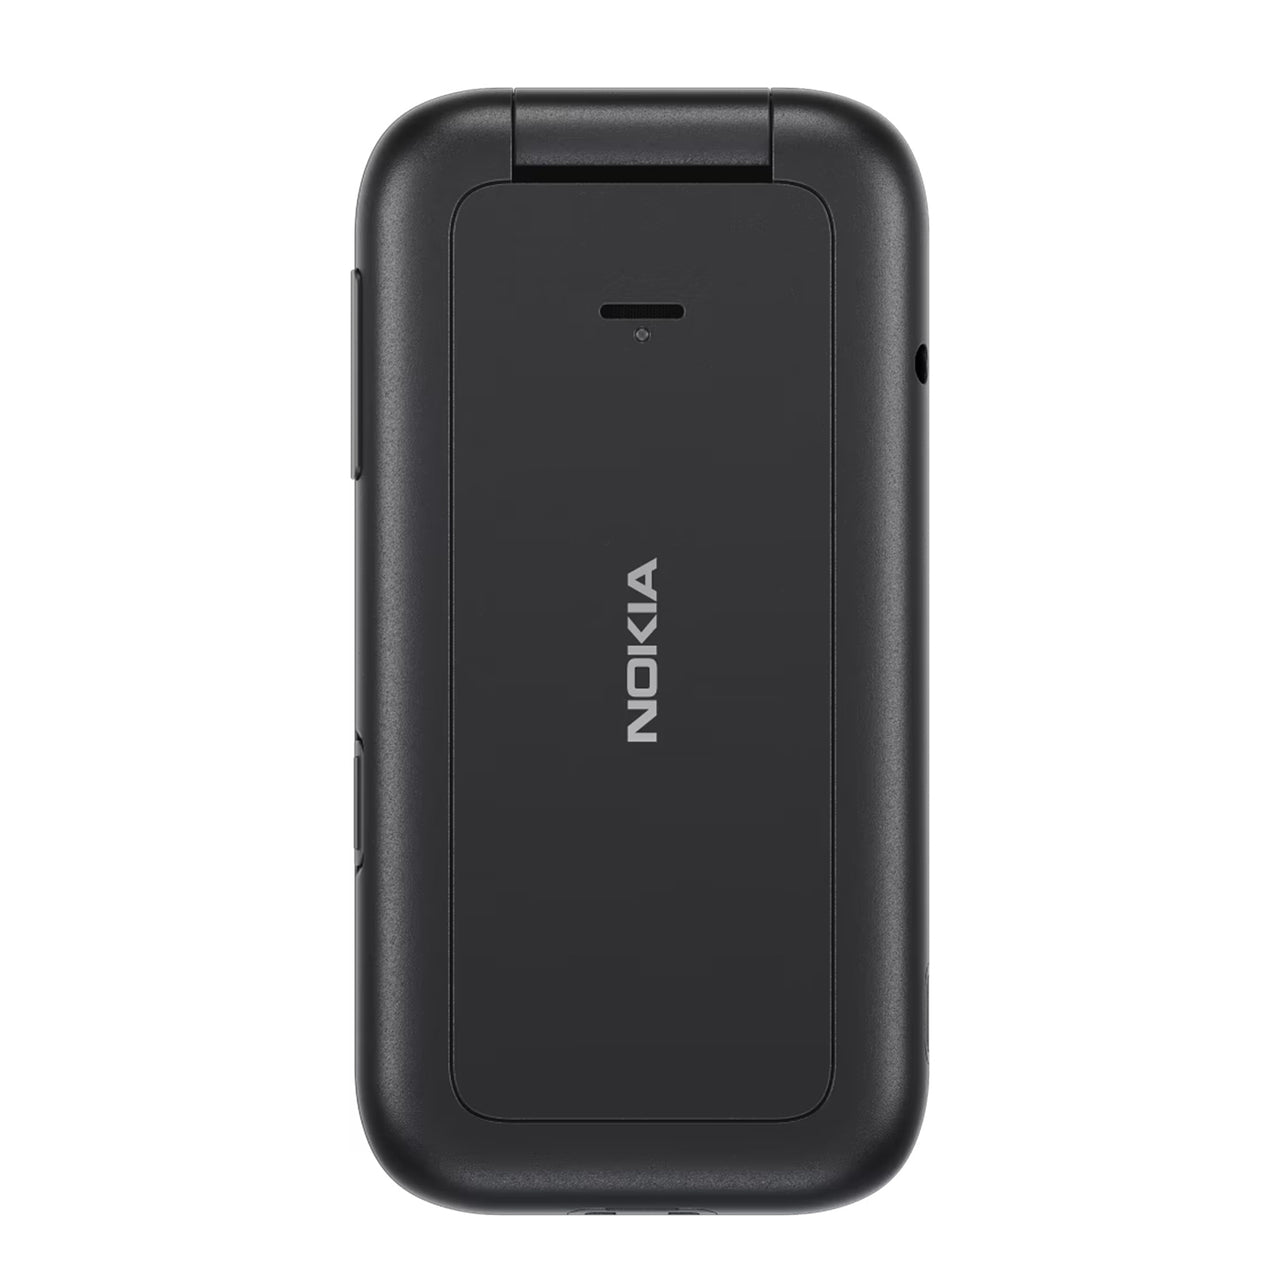 OPEN BOX Nokia 2660 Dual SIM 4G FLIP BIG Button Phone Unlocked - Black